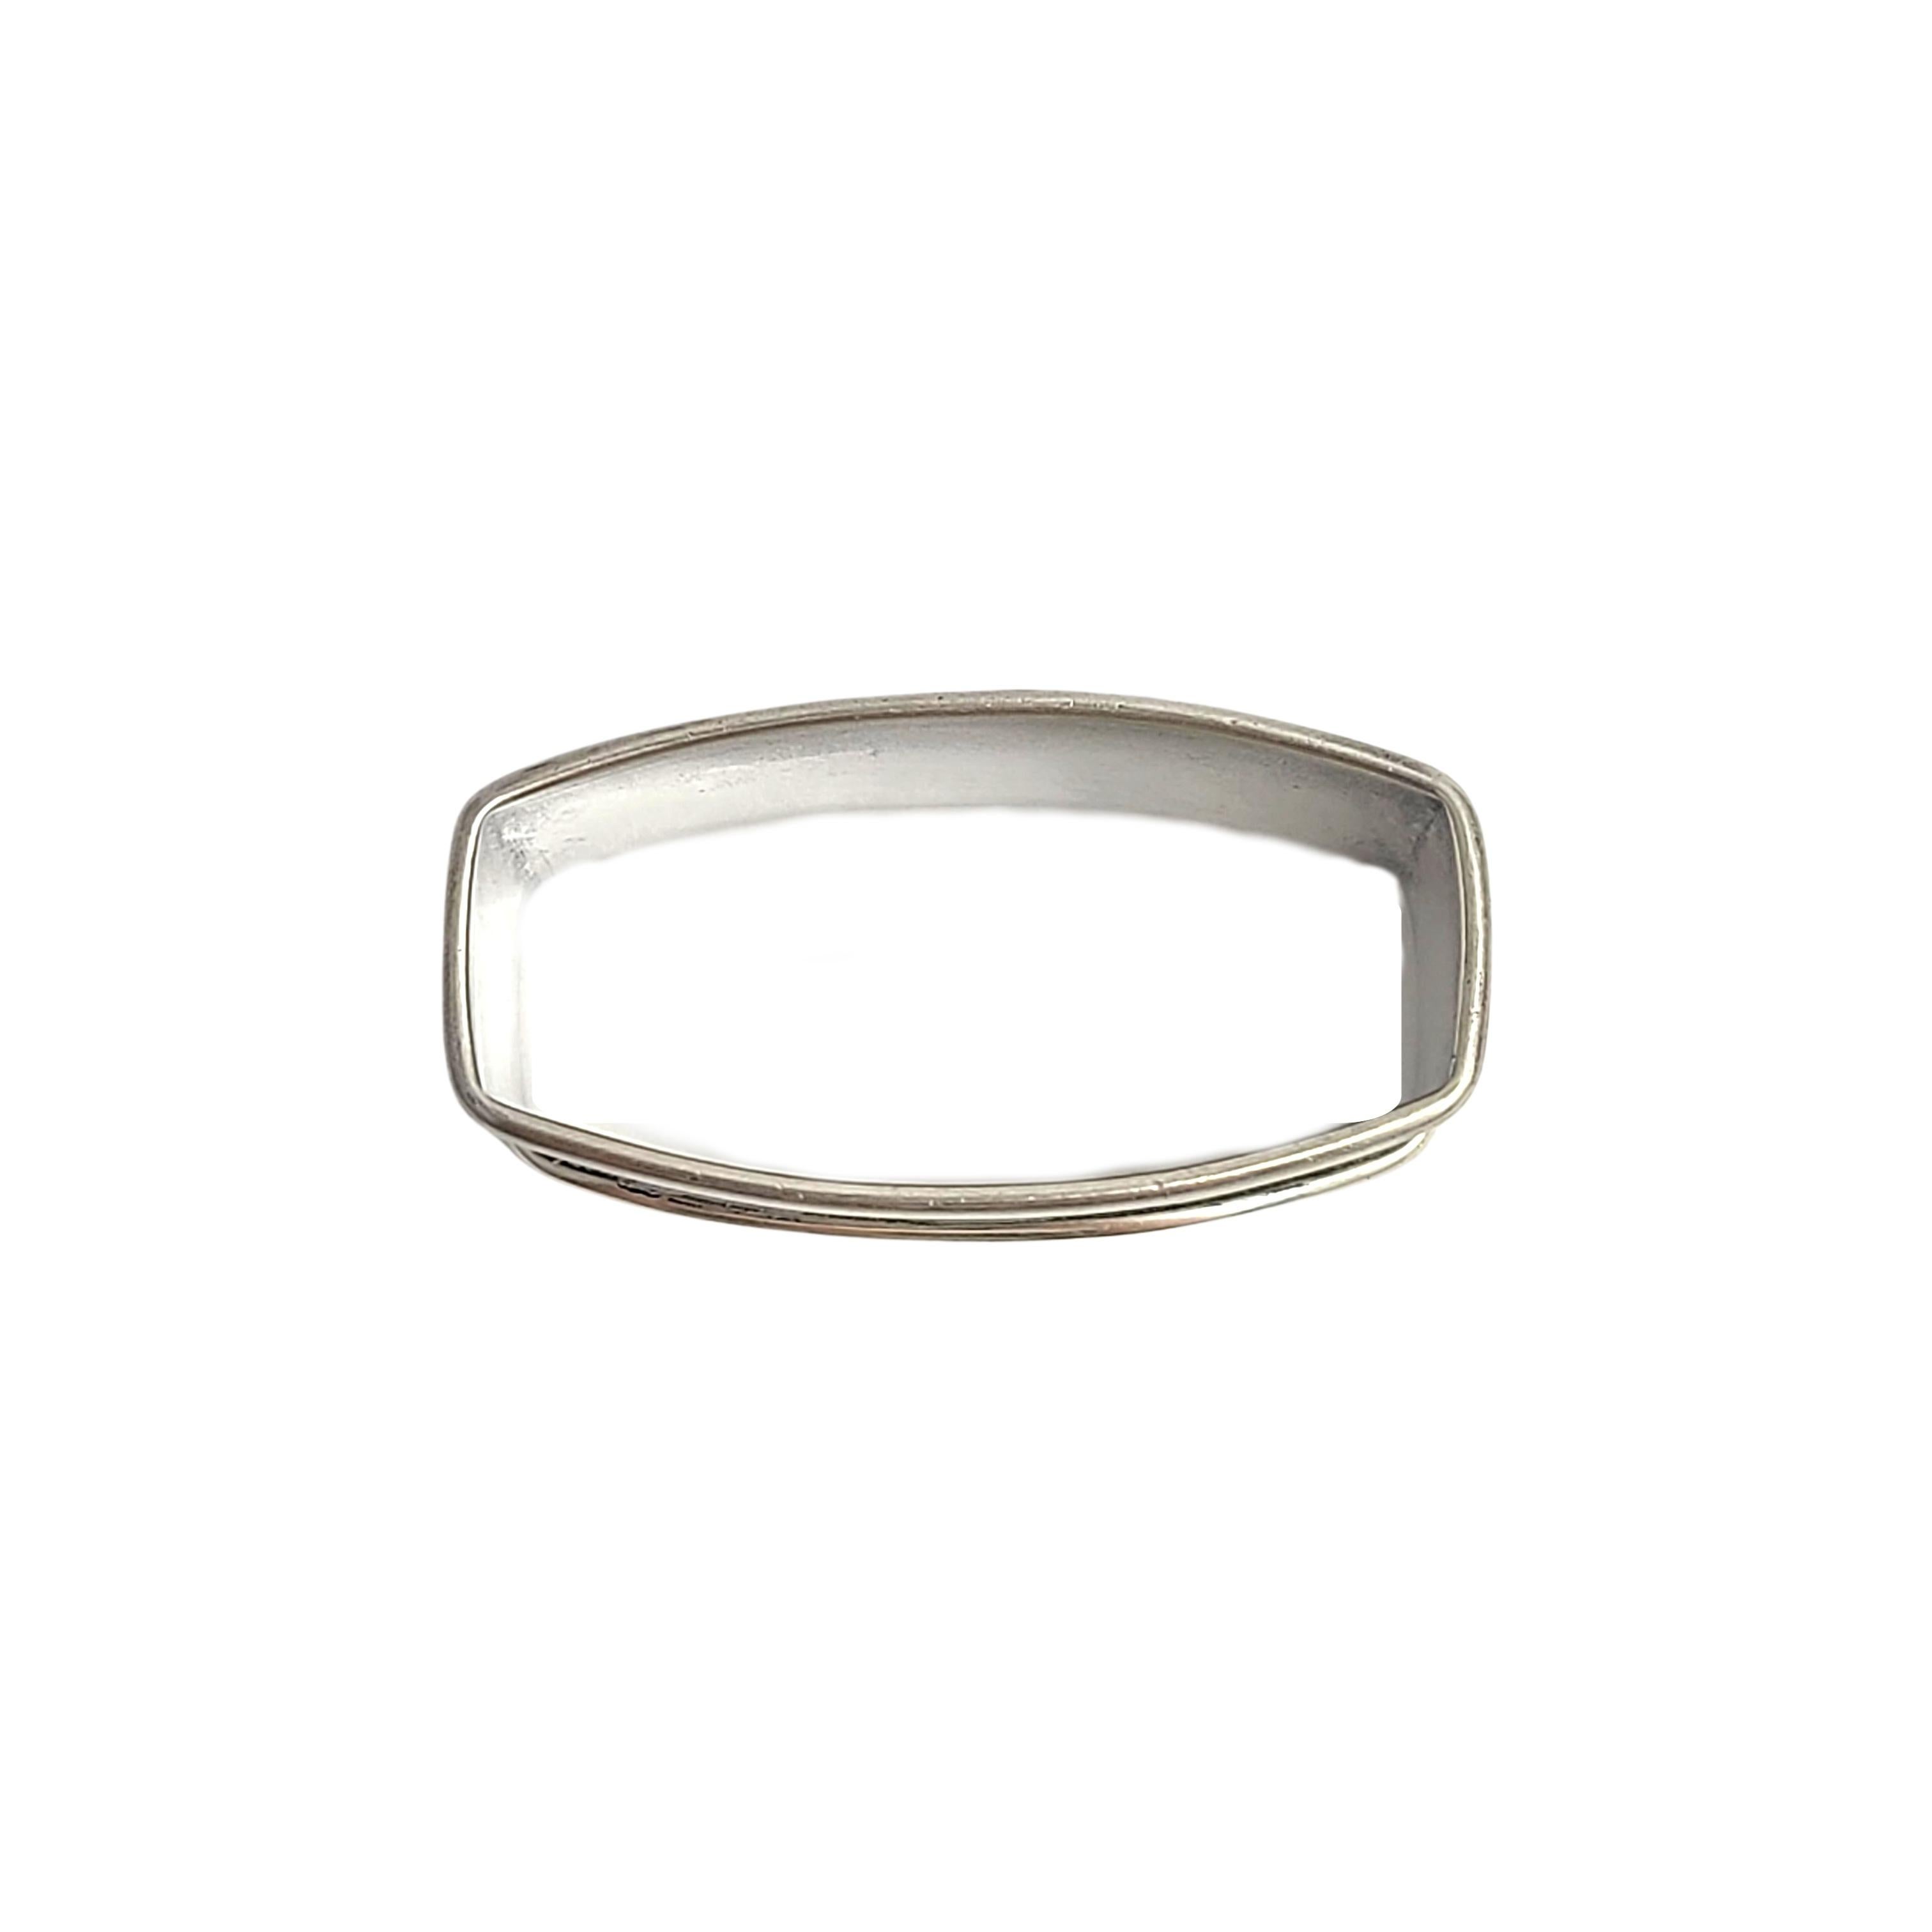 Webster Sterling Silver Enamel Child's Napkin Ring with Monogram #12342 For Sale 1